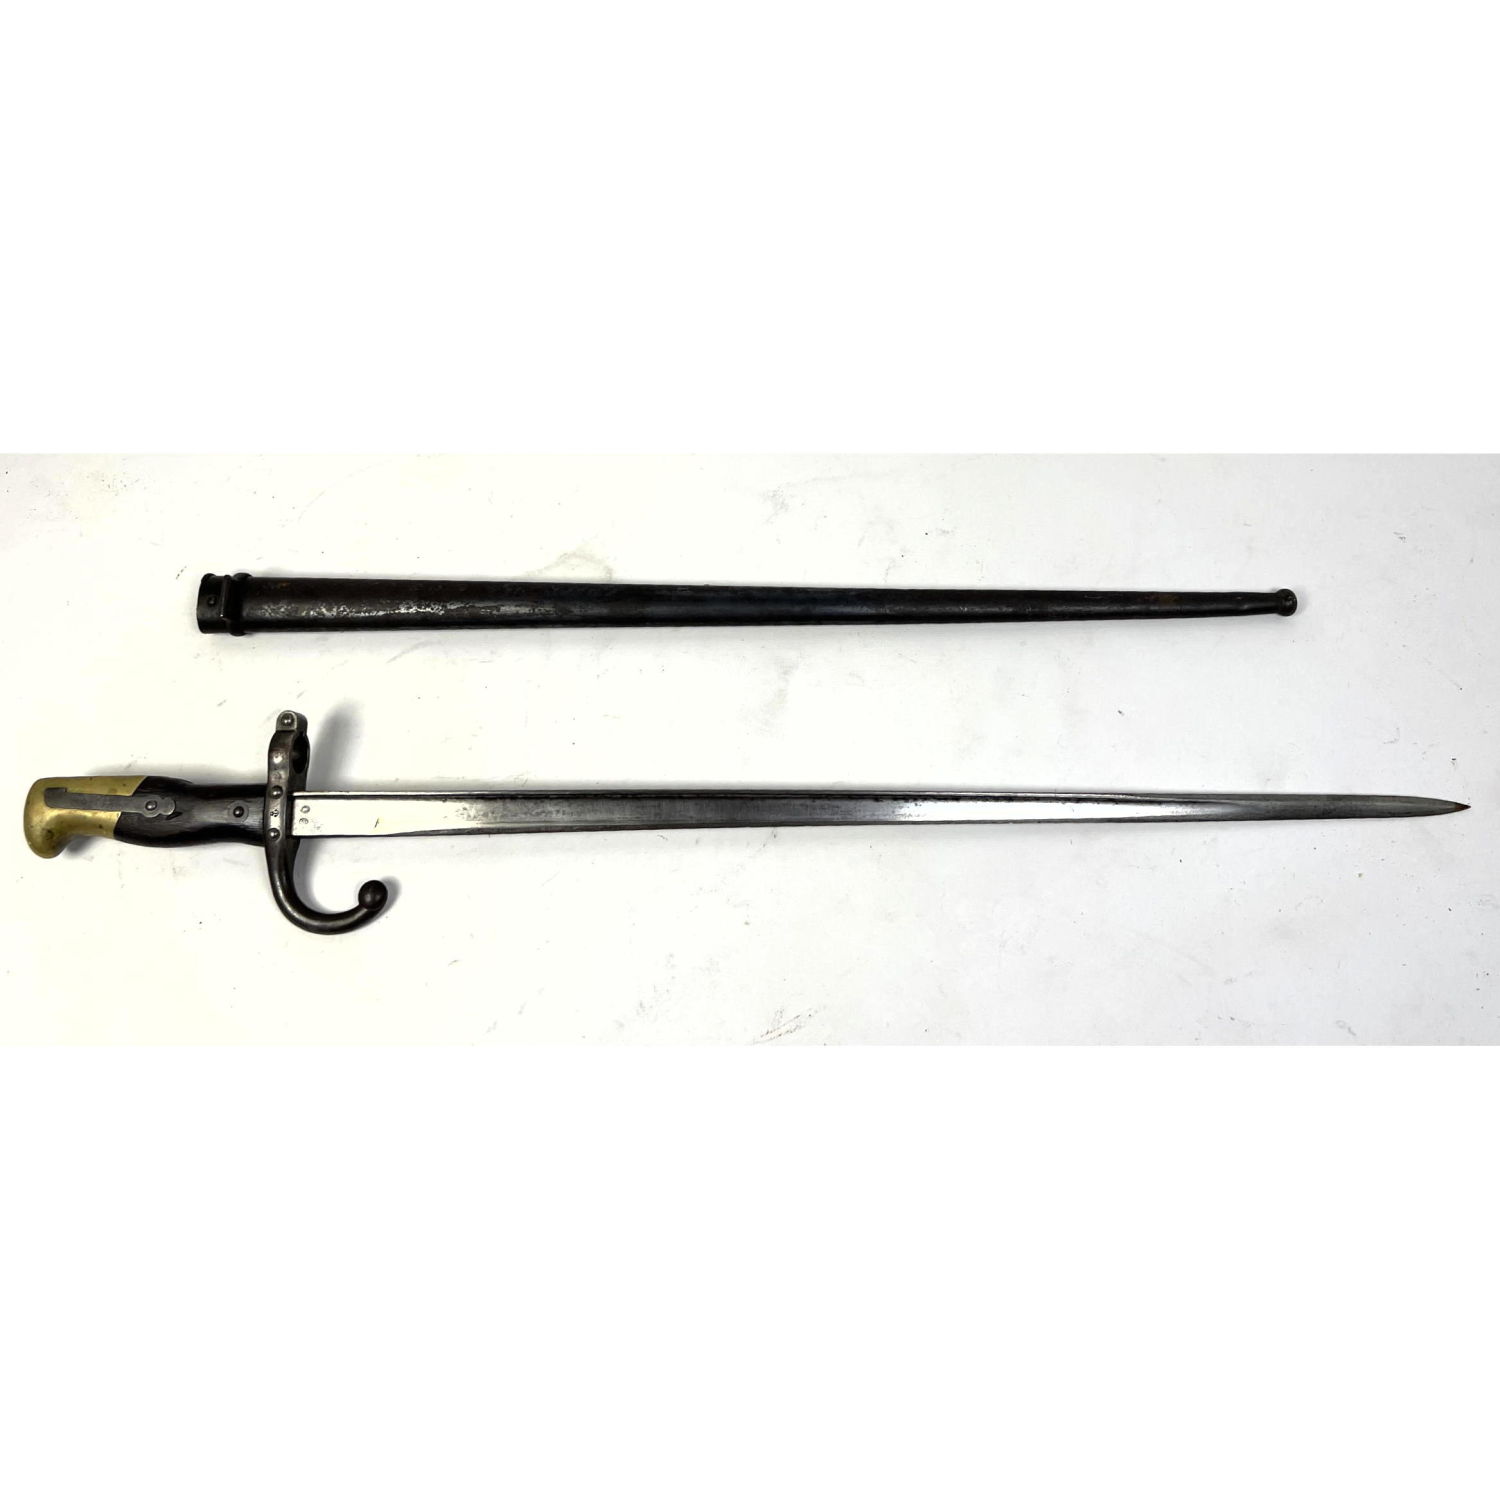 Antique Long Bayonet Sword. Metal